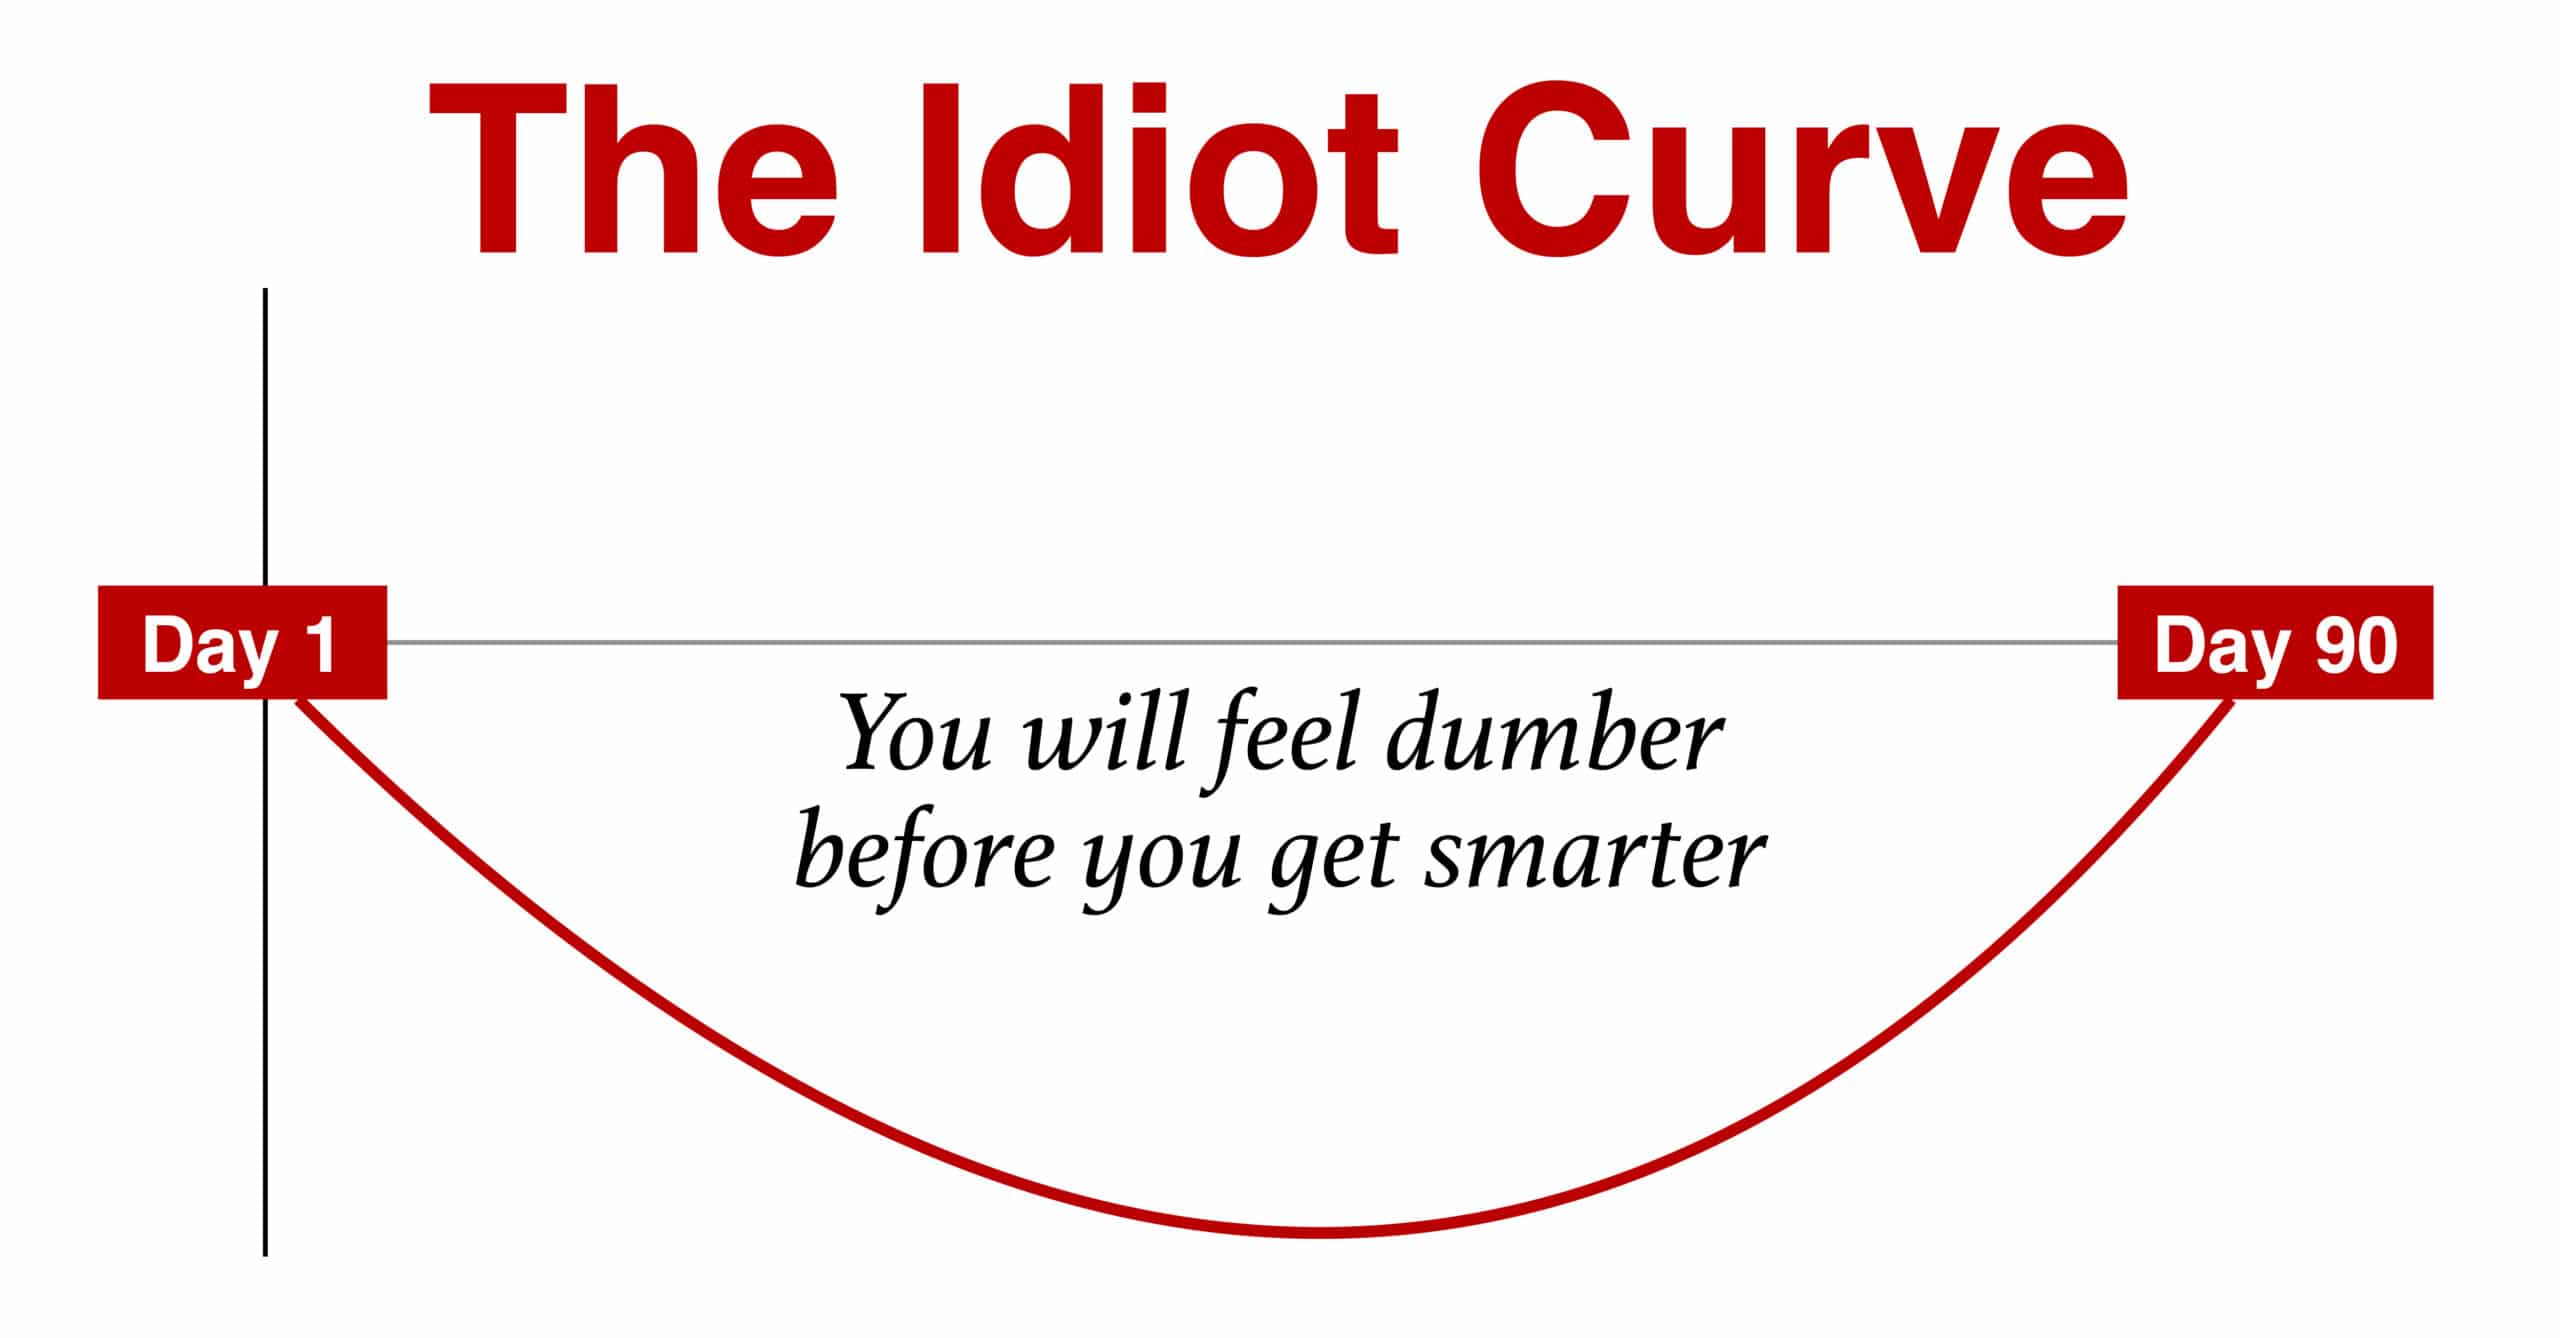 The Idiot curve